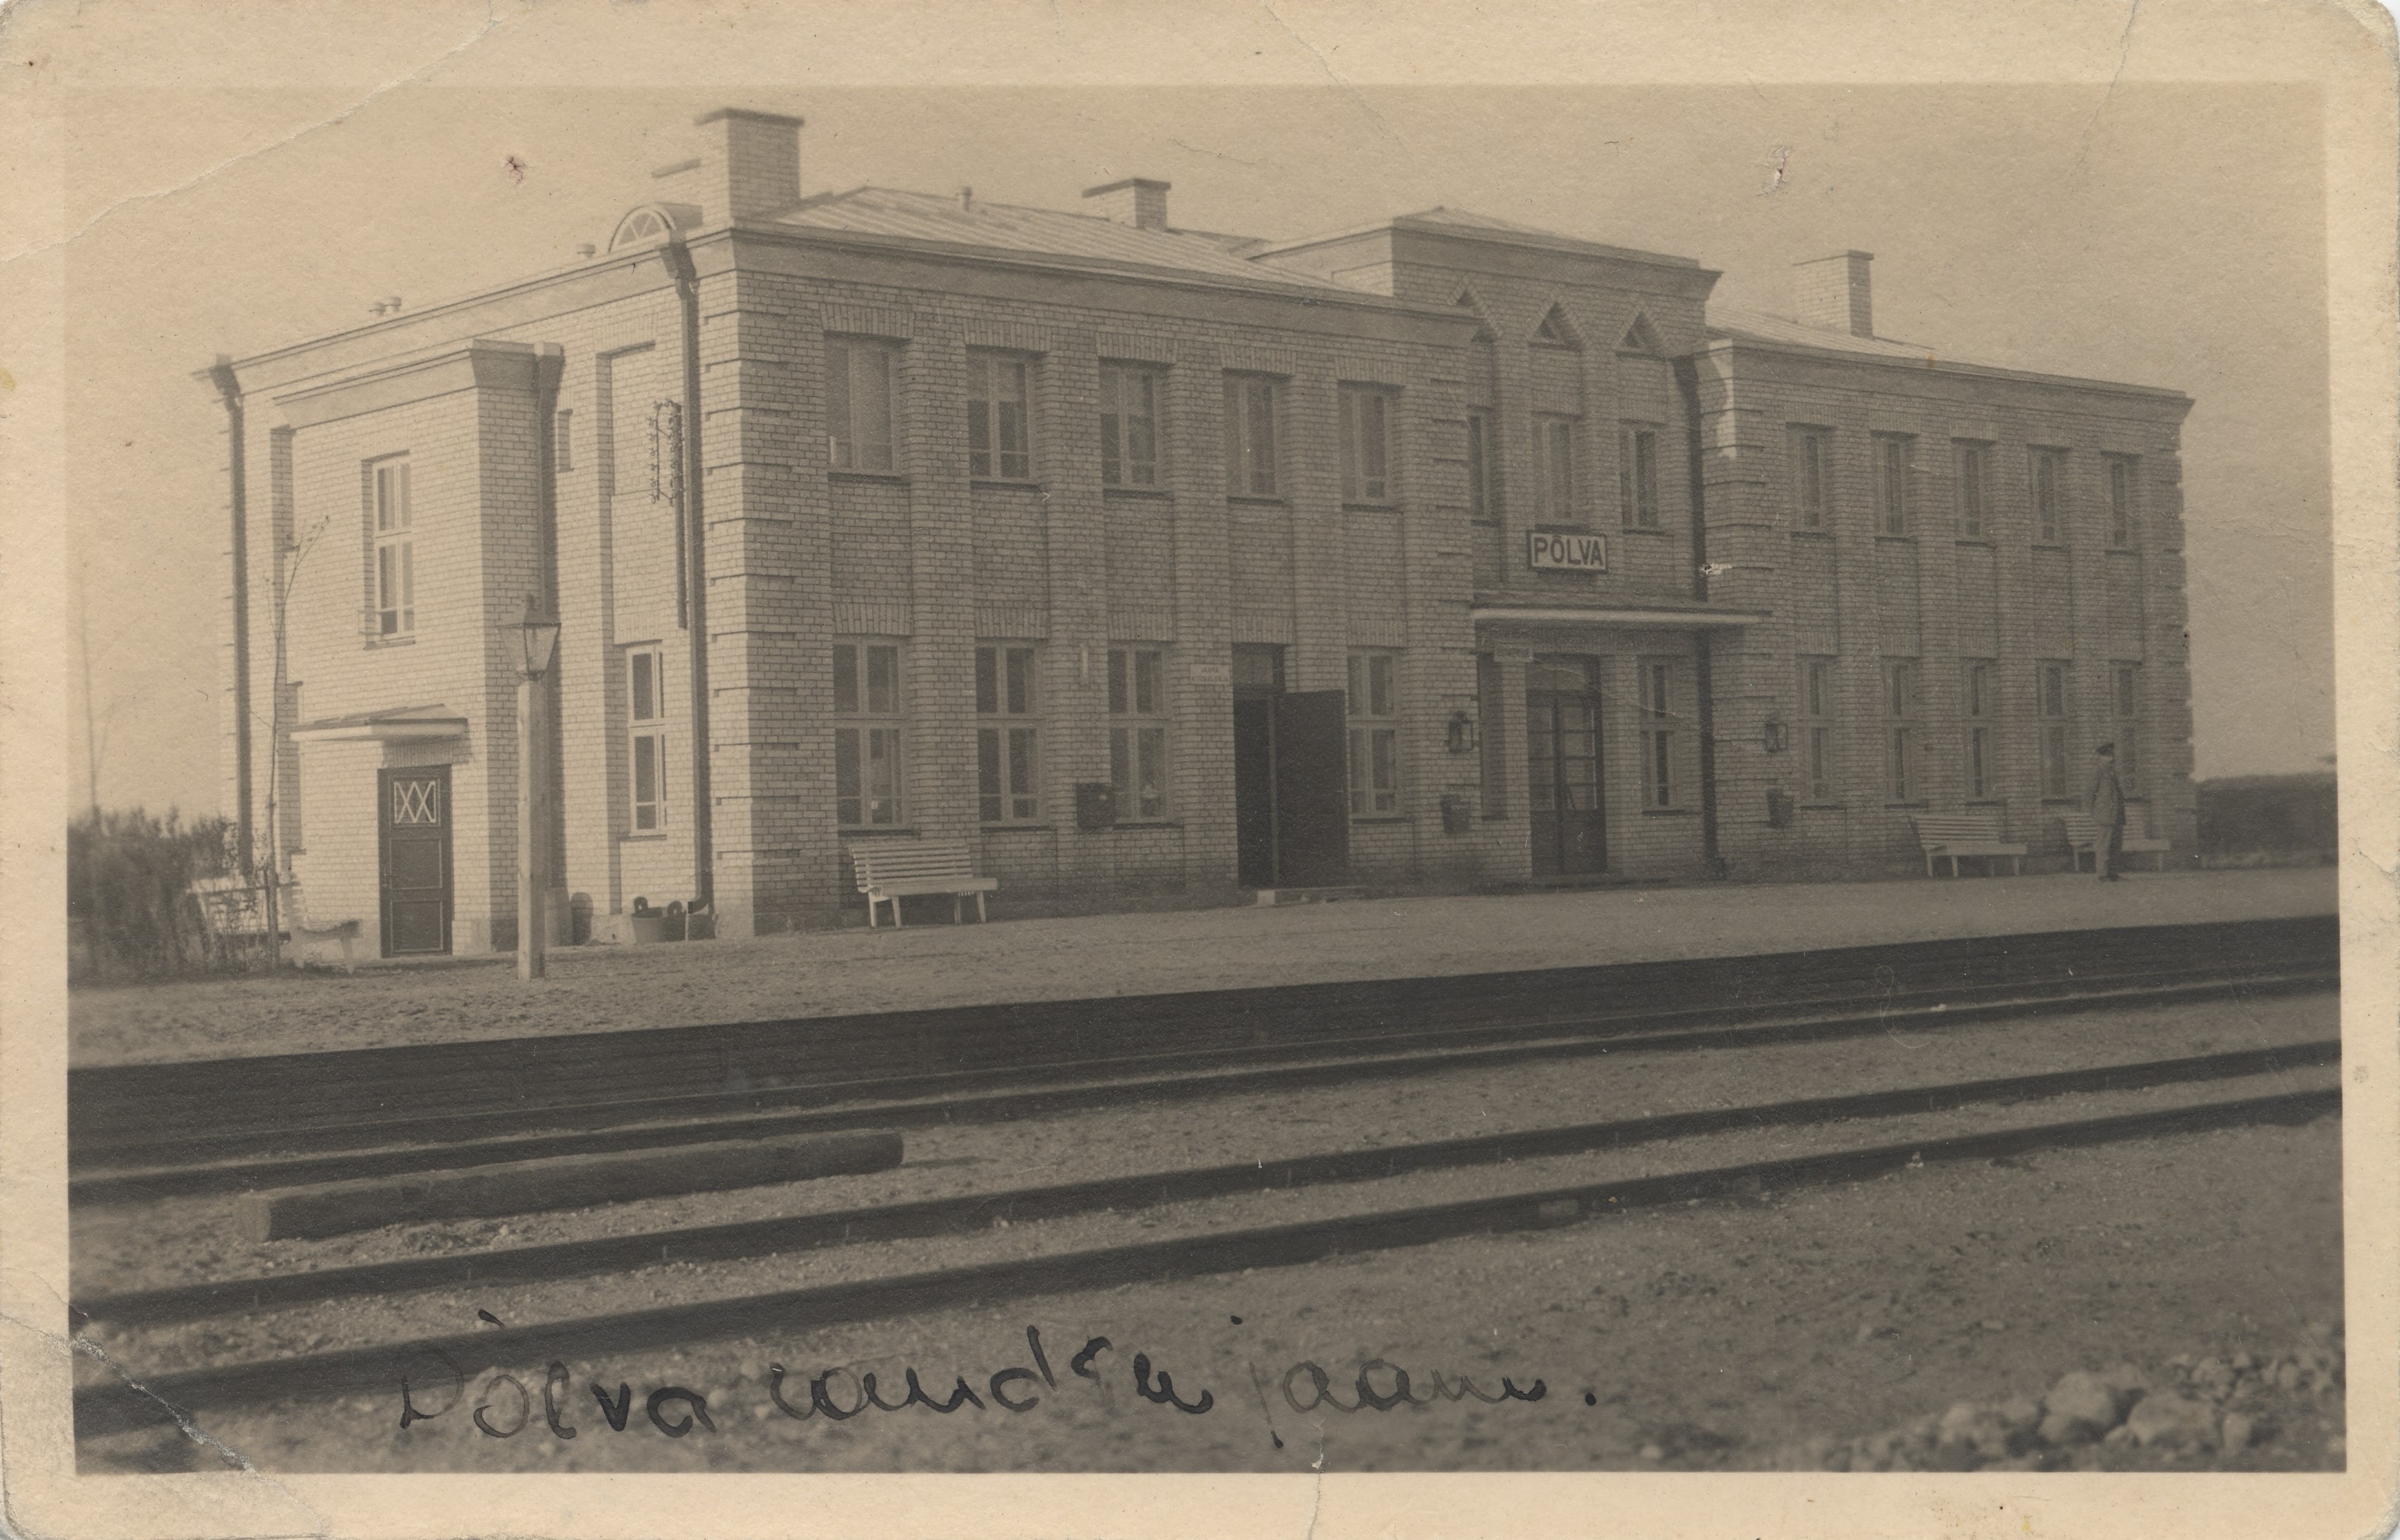 Põlva Railway Station